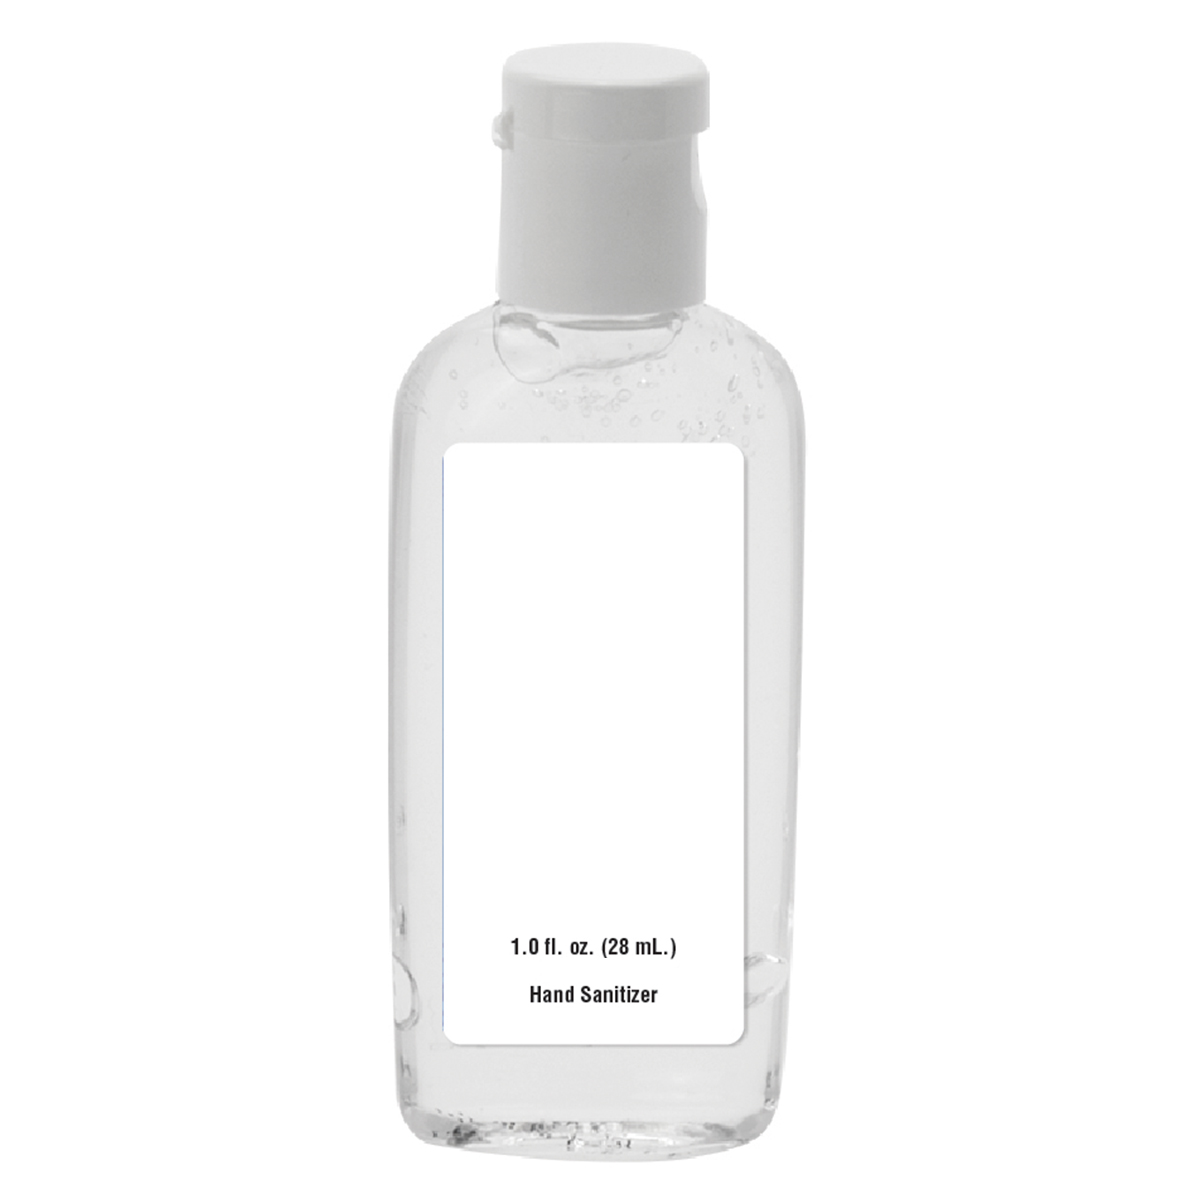 Citrus Breeze Clear Sanitizer in Oval Bottle 1 oz